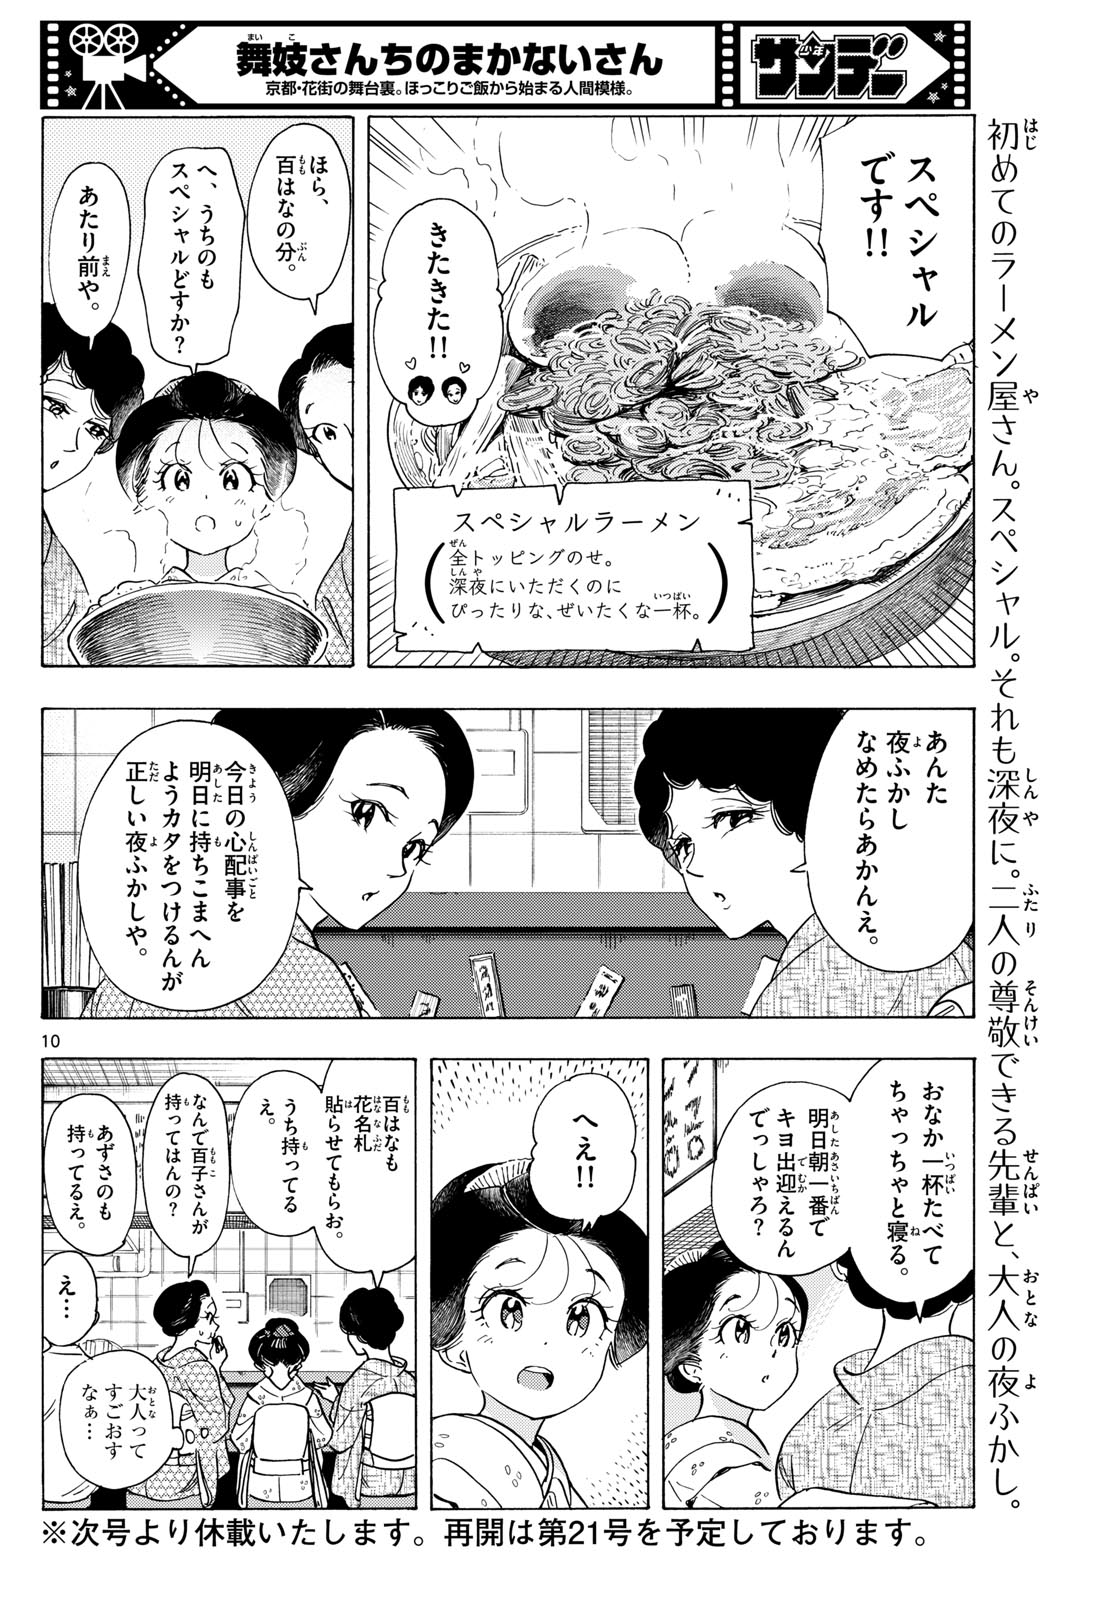 Maiko-san Chi no Makanai-san - Chapter 298 - Page 10